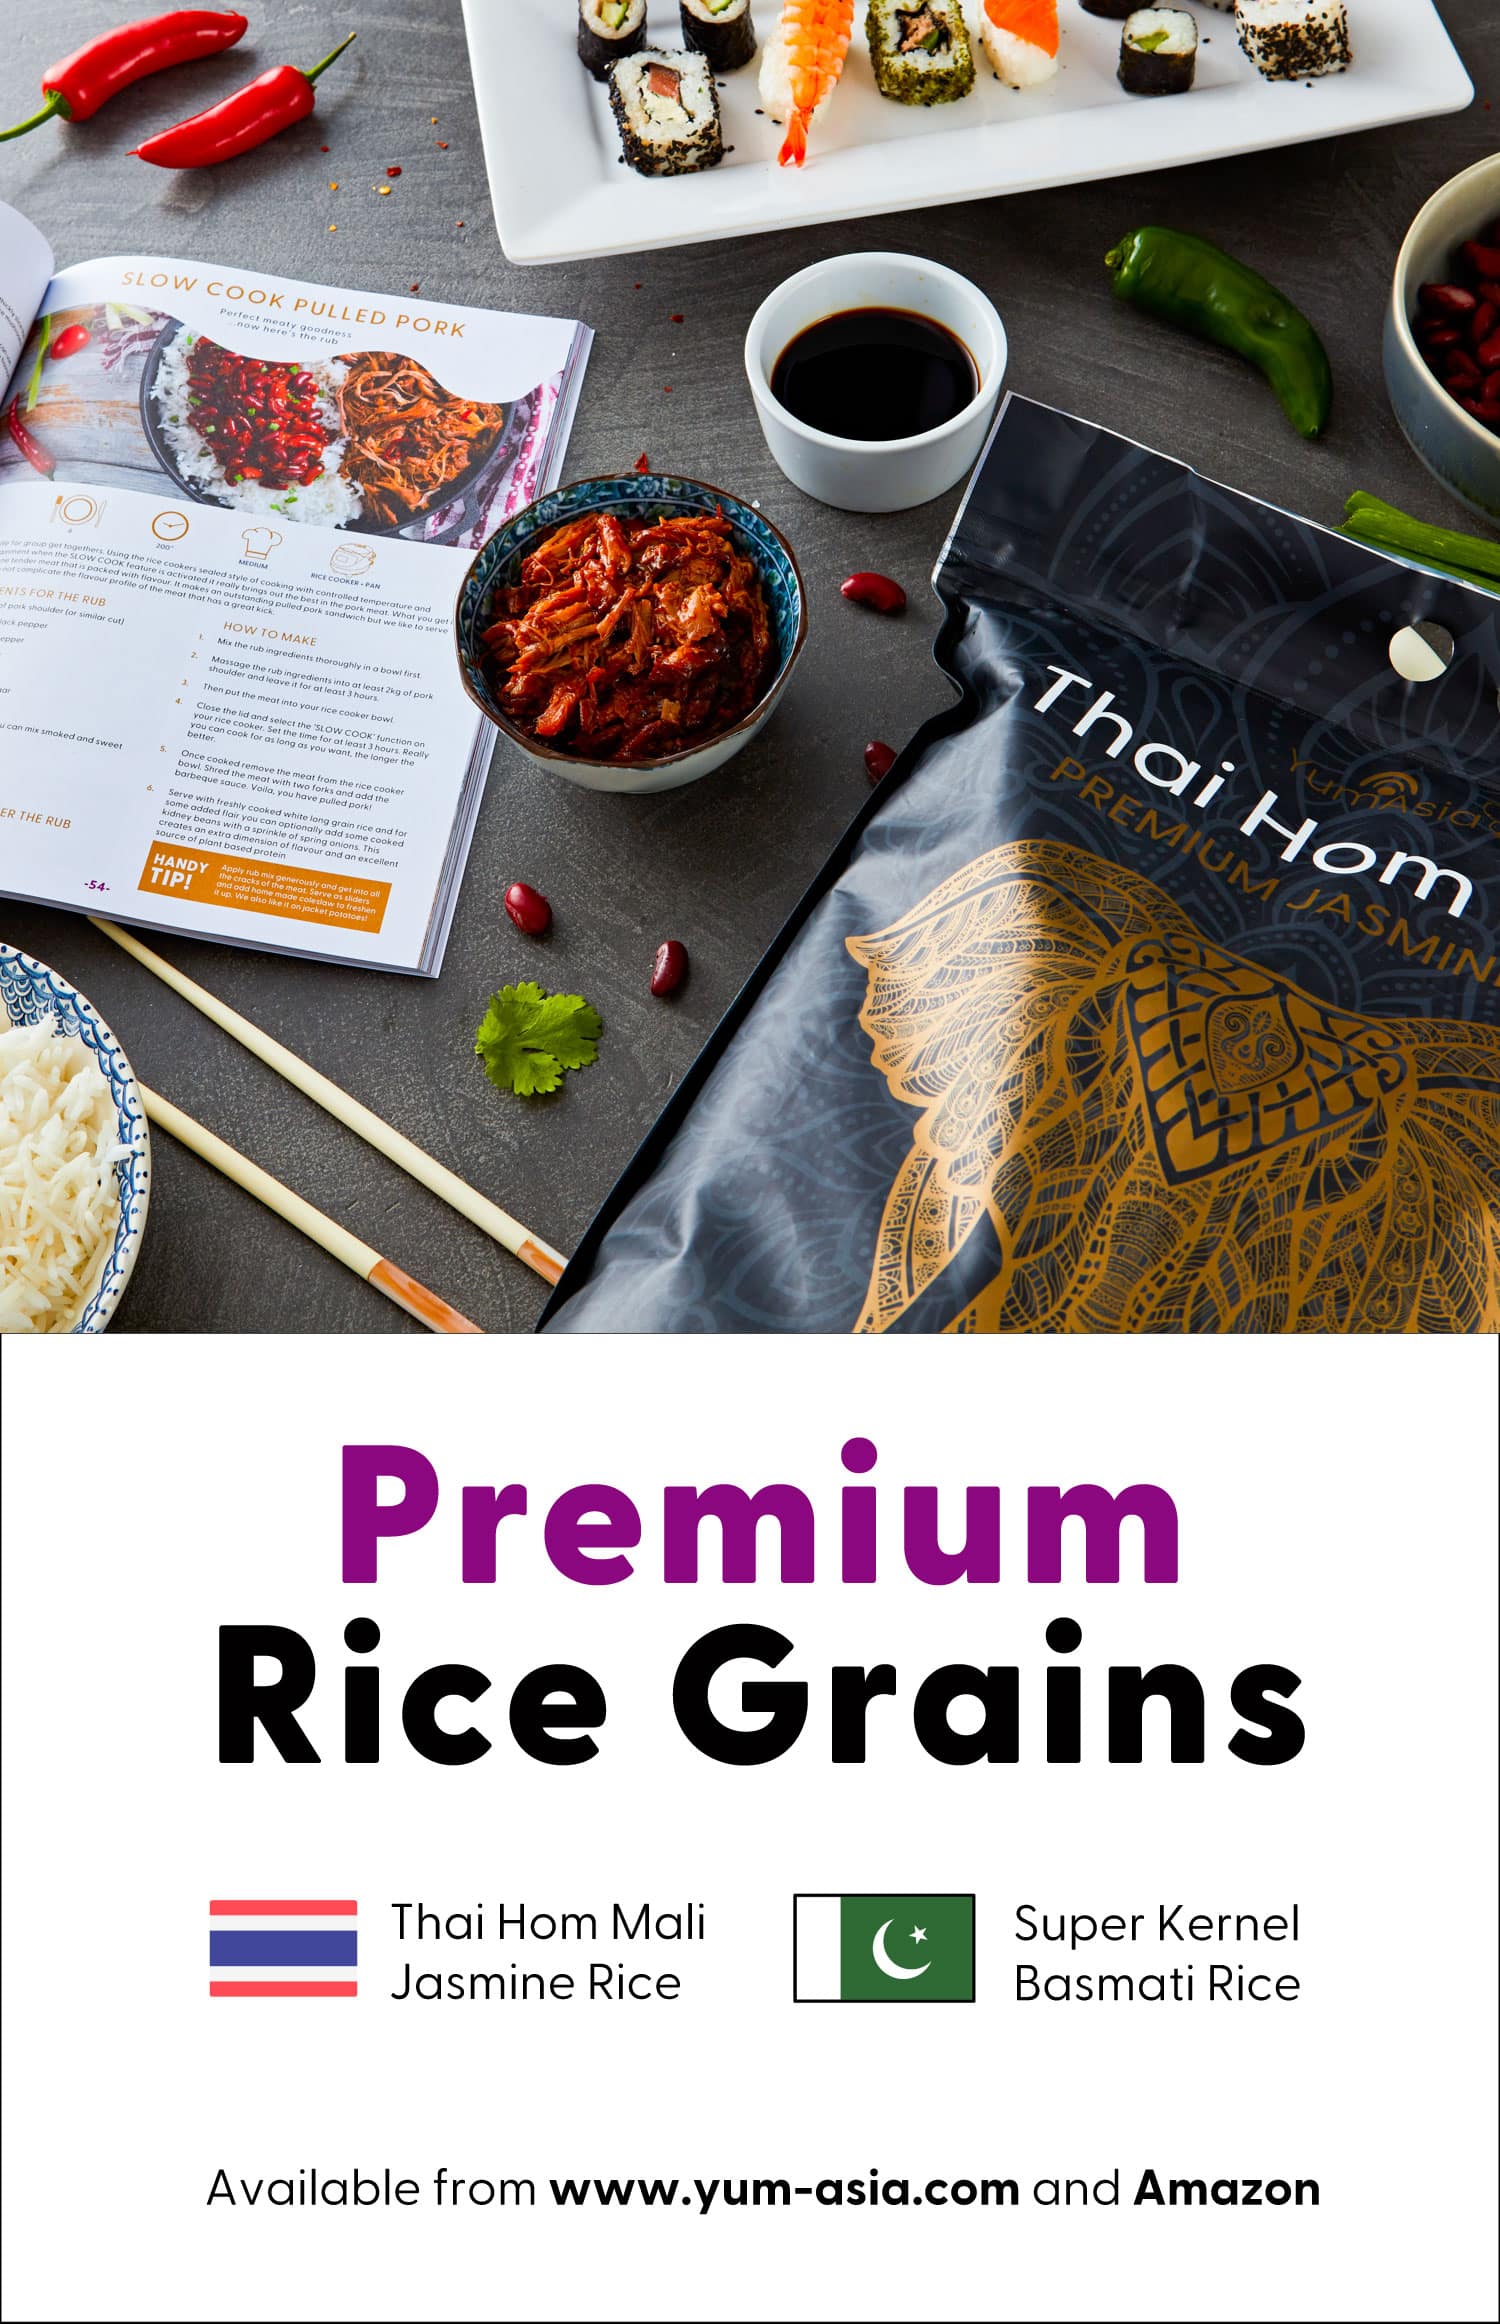 Premium Rice Grains by Yum Asia